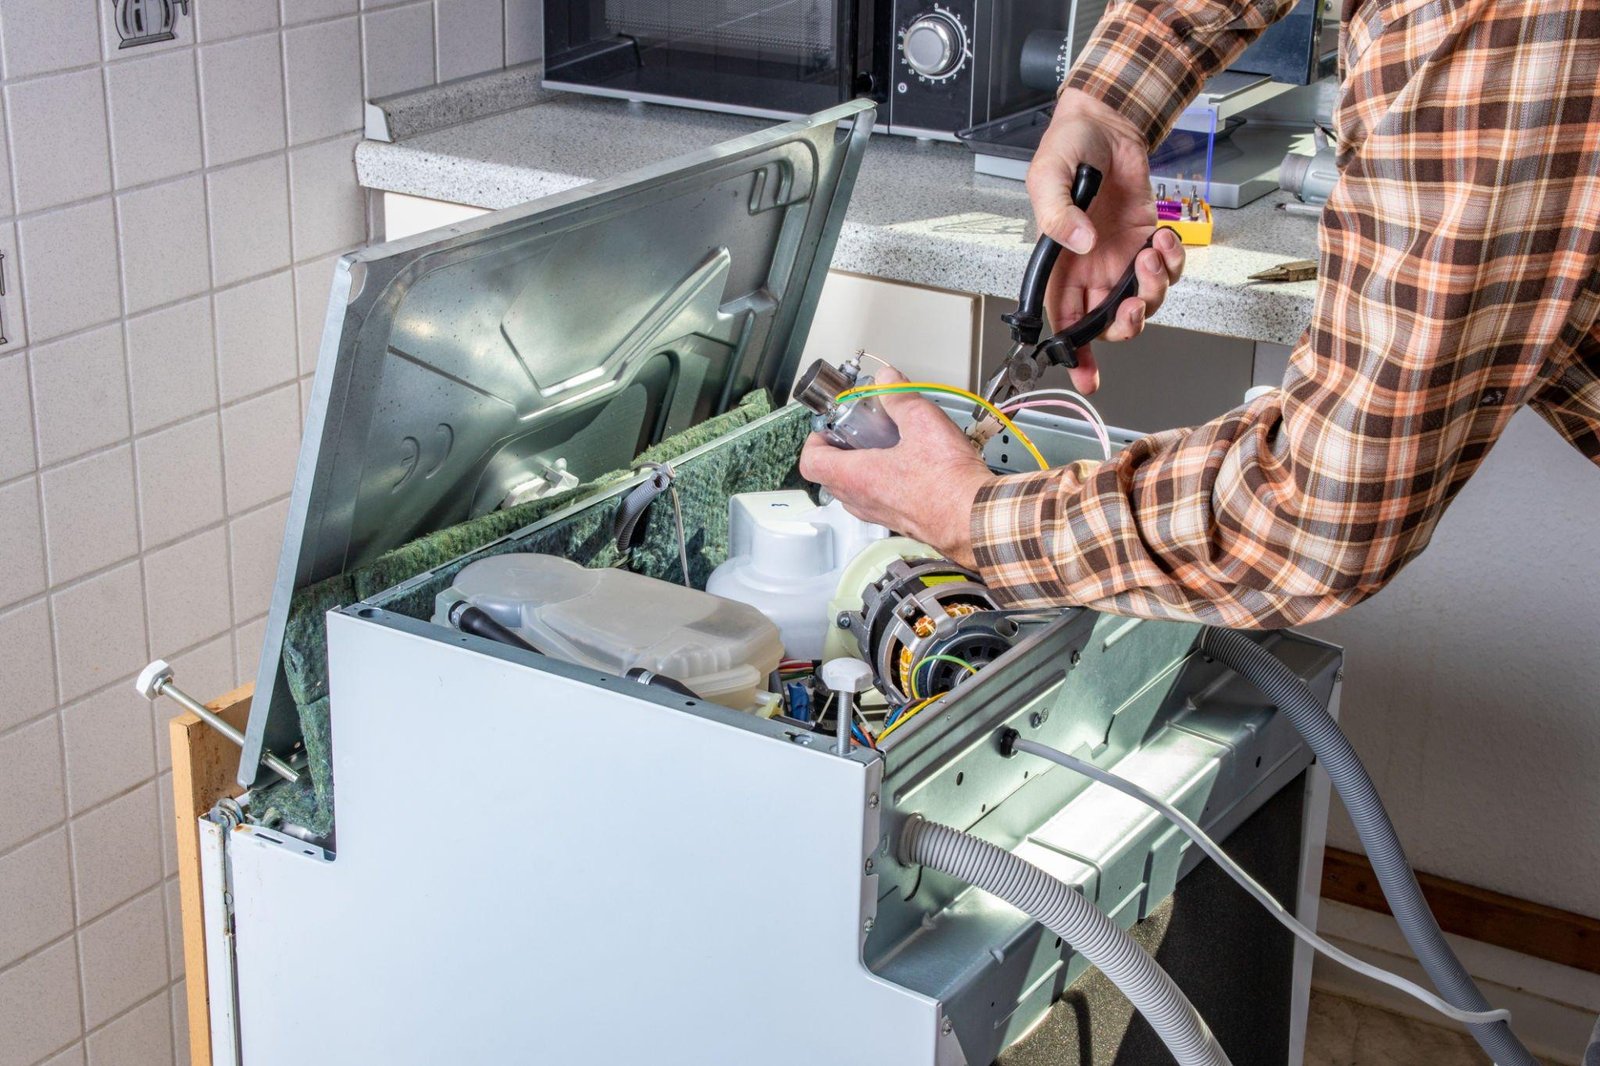 Dishwasher technician